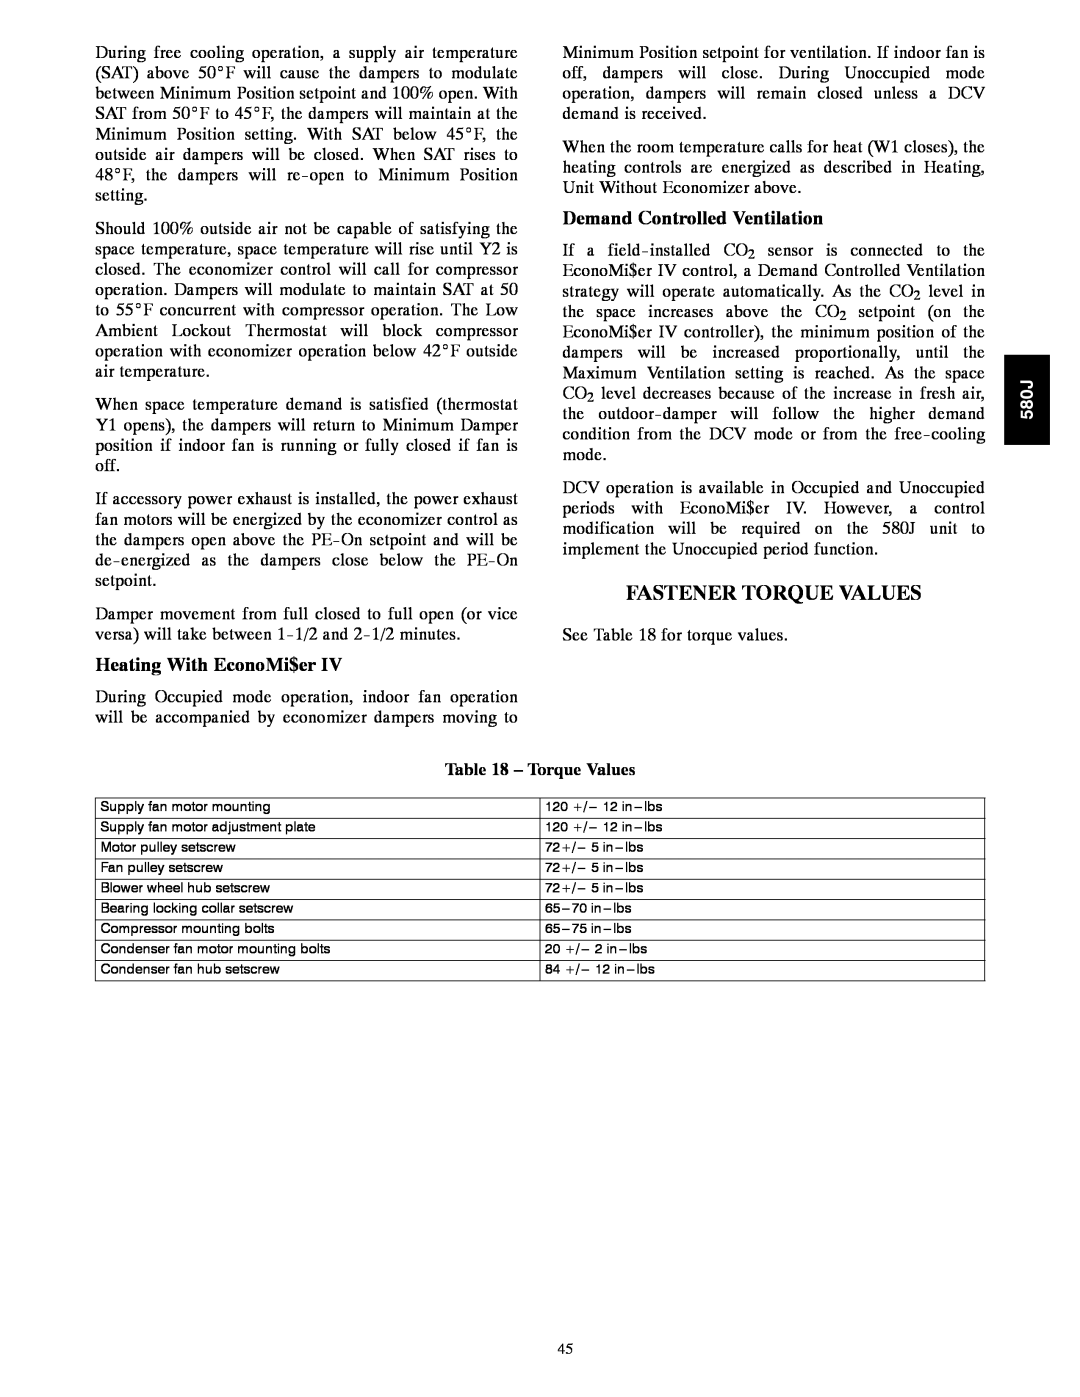 Bryant 580J*04--12 appendix Fastener Torque Values, Demand Controlled Ventilation, Heating With EconoMi$er 